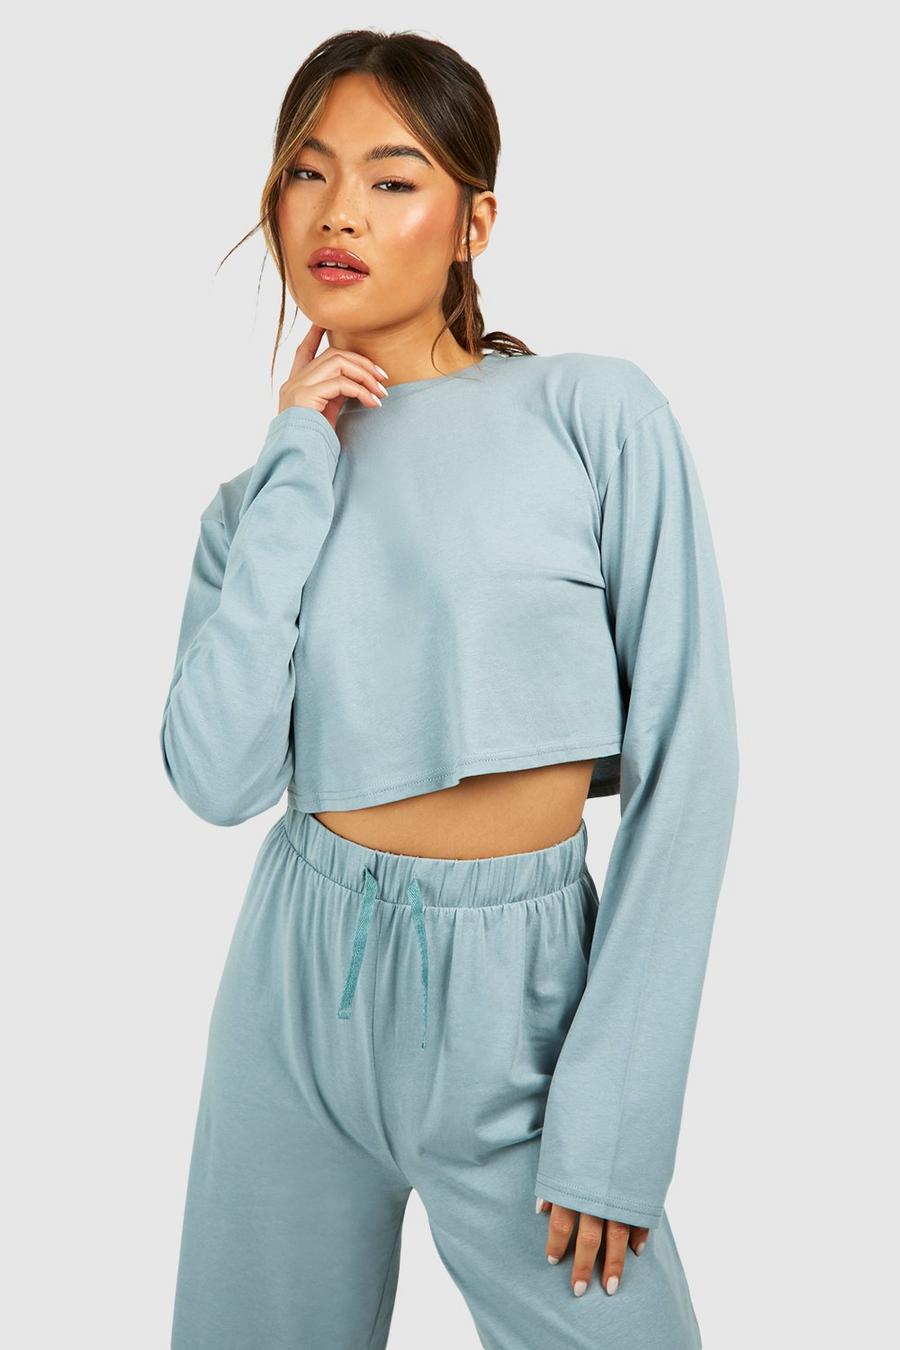 Boohoo Lydia Knitted Loungewear Set With Crop Top, $28, BooHoo